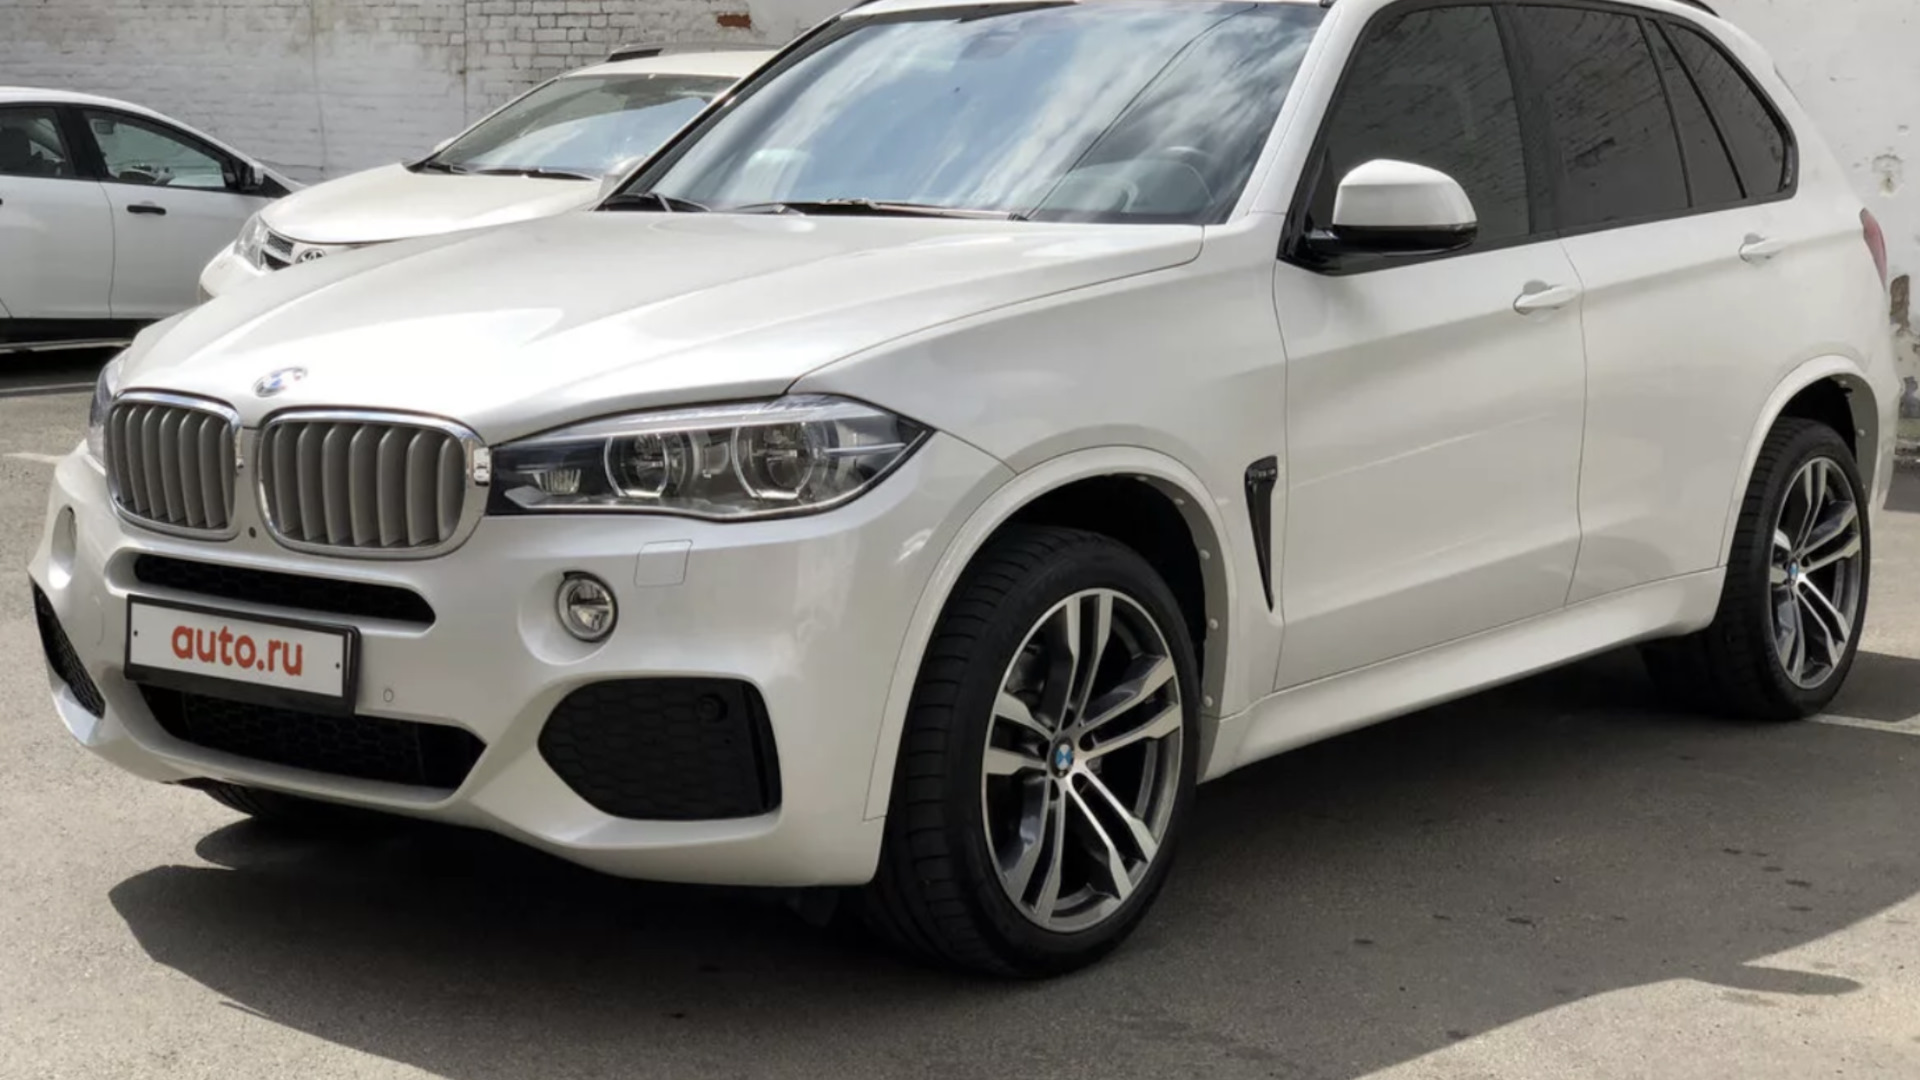 Х5 3 литра дизель. BMW x5 f15 White. БМВ x5 f15 белый. БМВ х5 f15 дизель. БМВ х5 ф15 3.0 дизель.